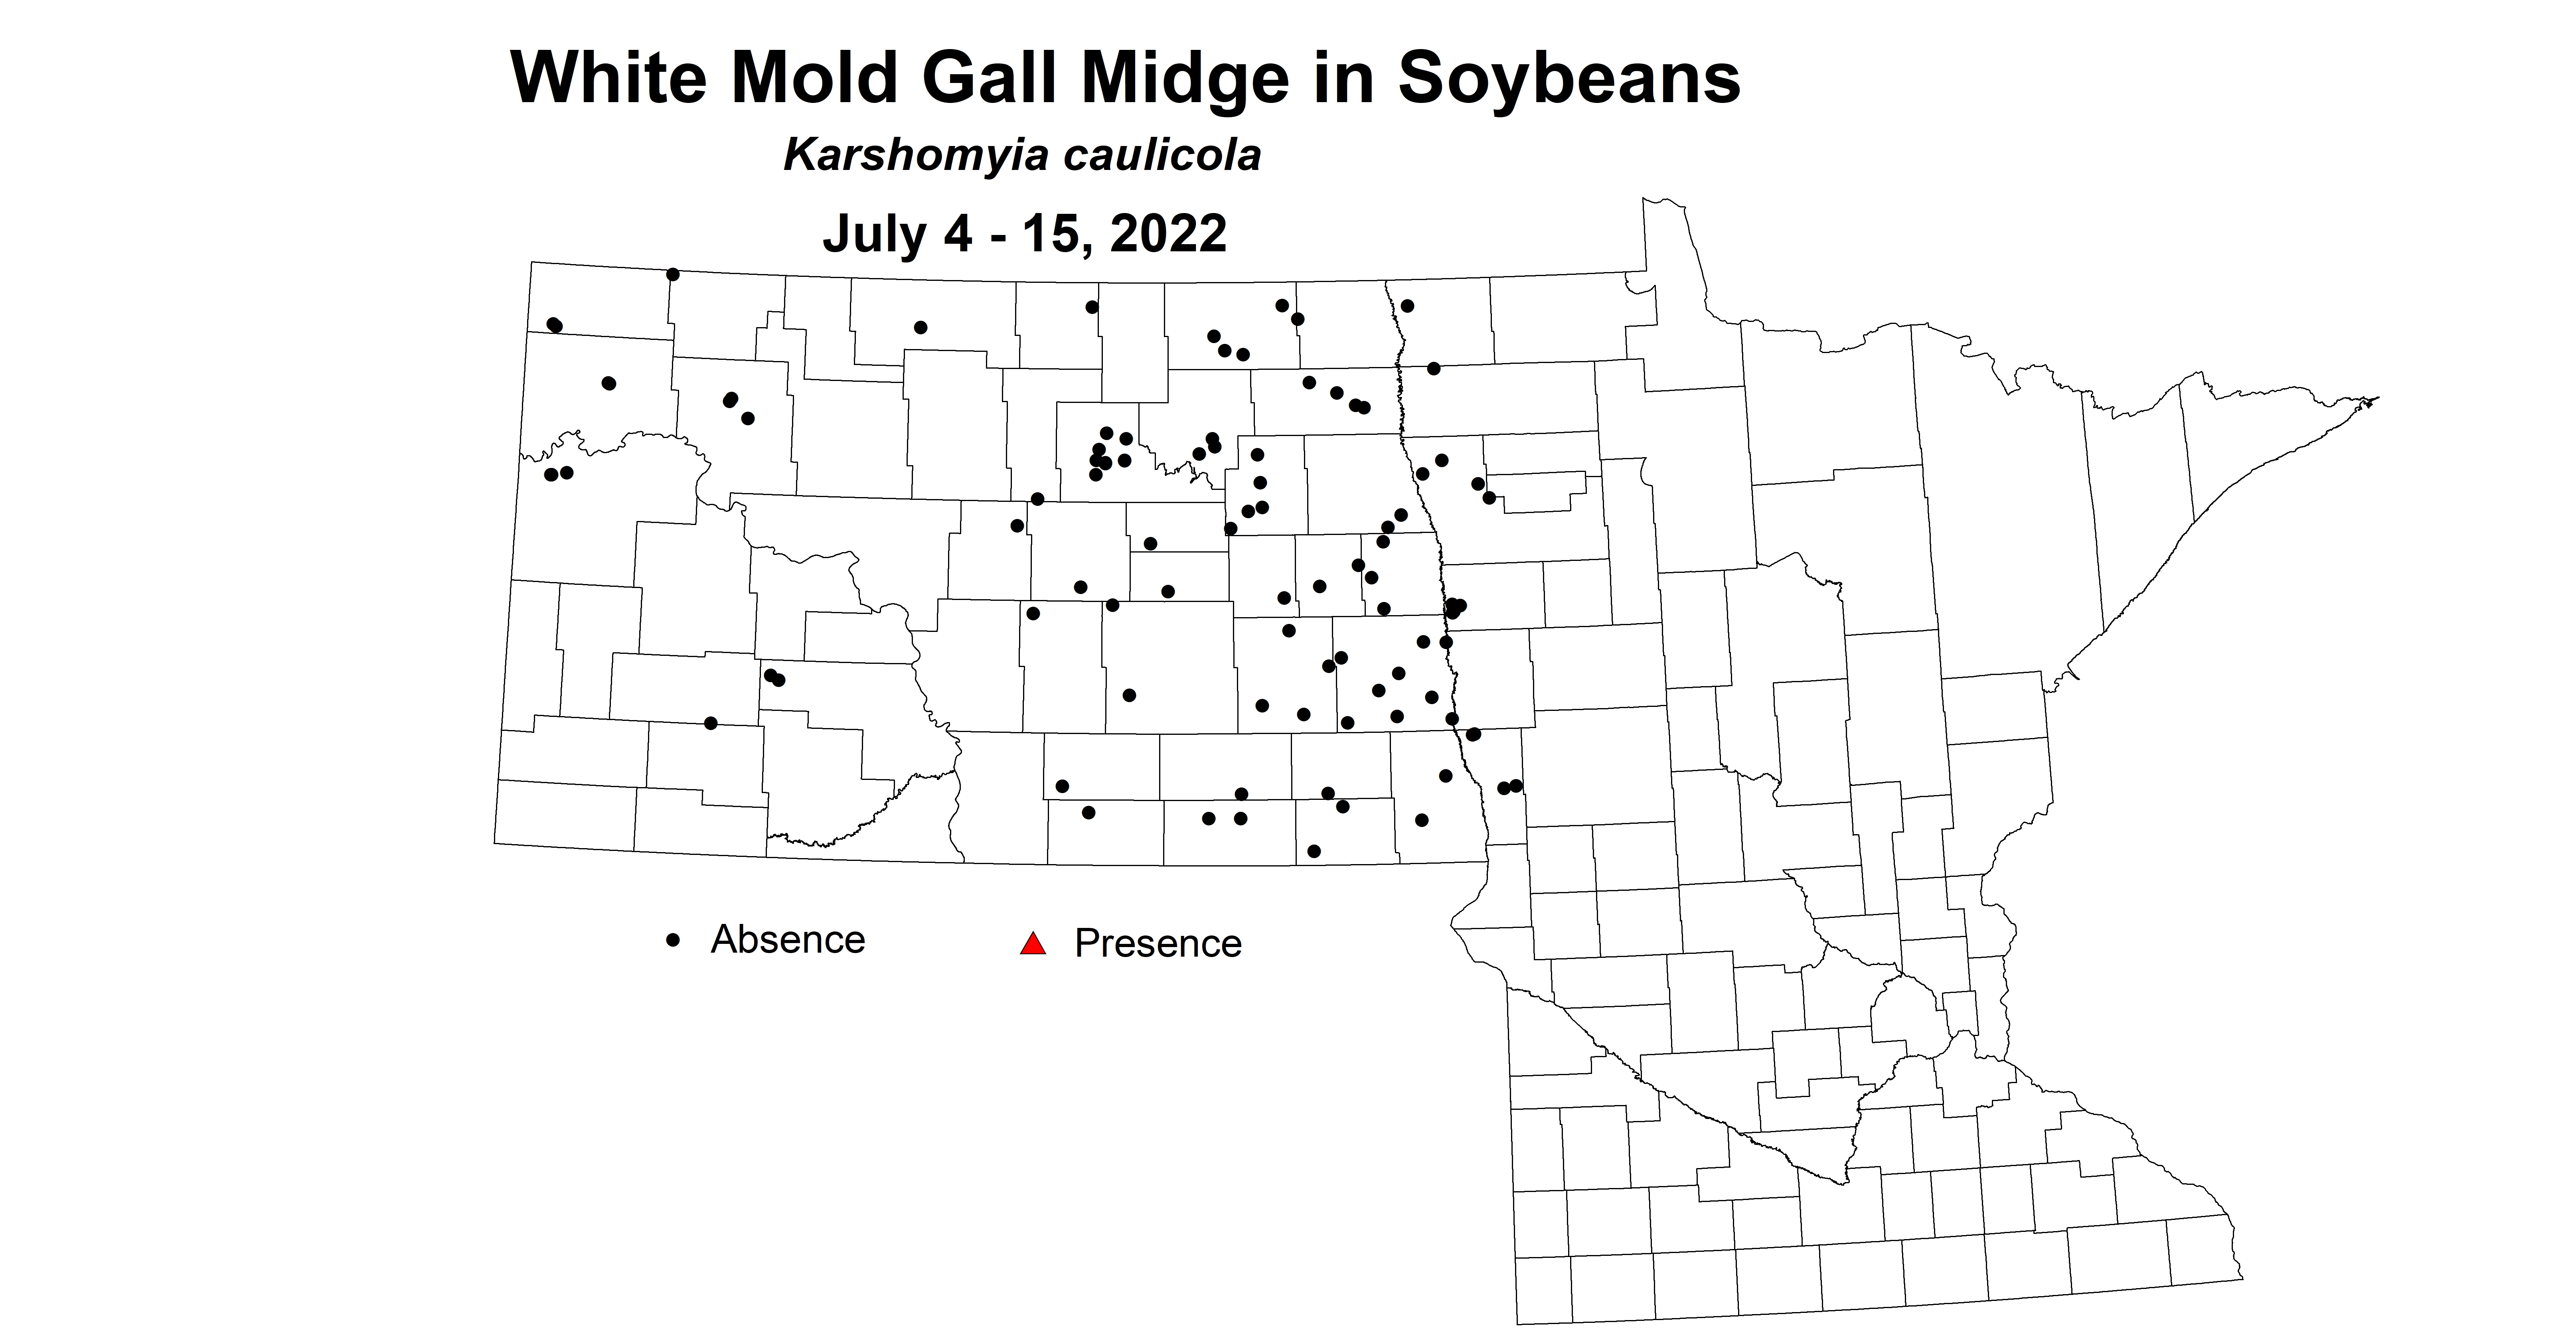 soybean presence of white mold gall midge 7.4-7.15